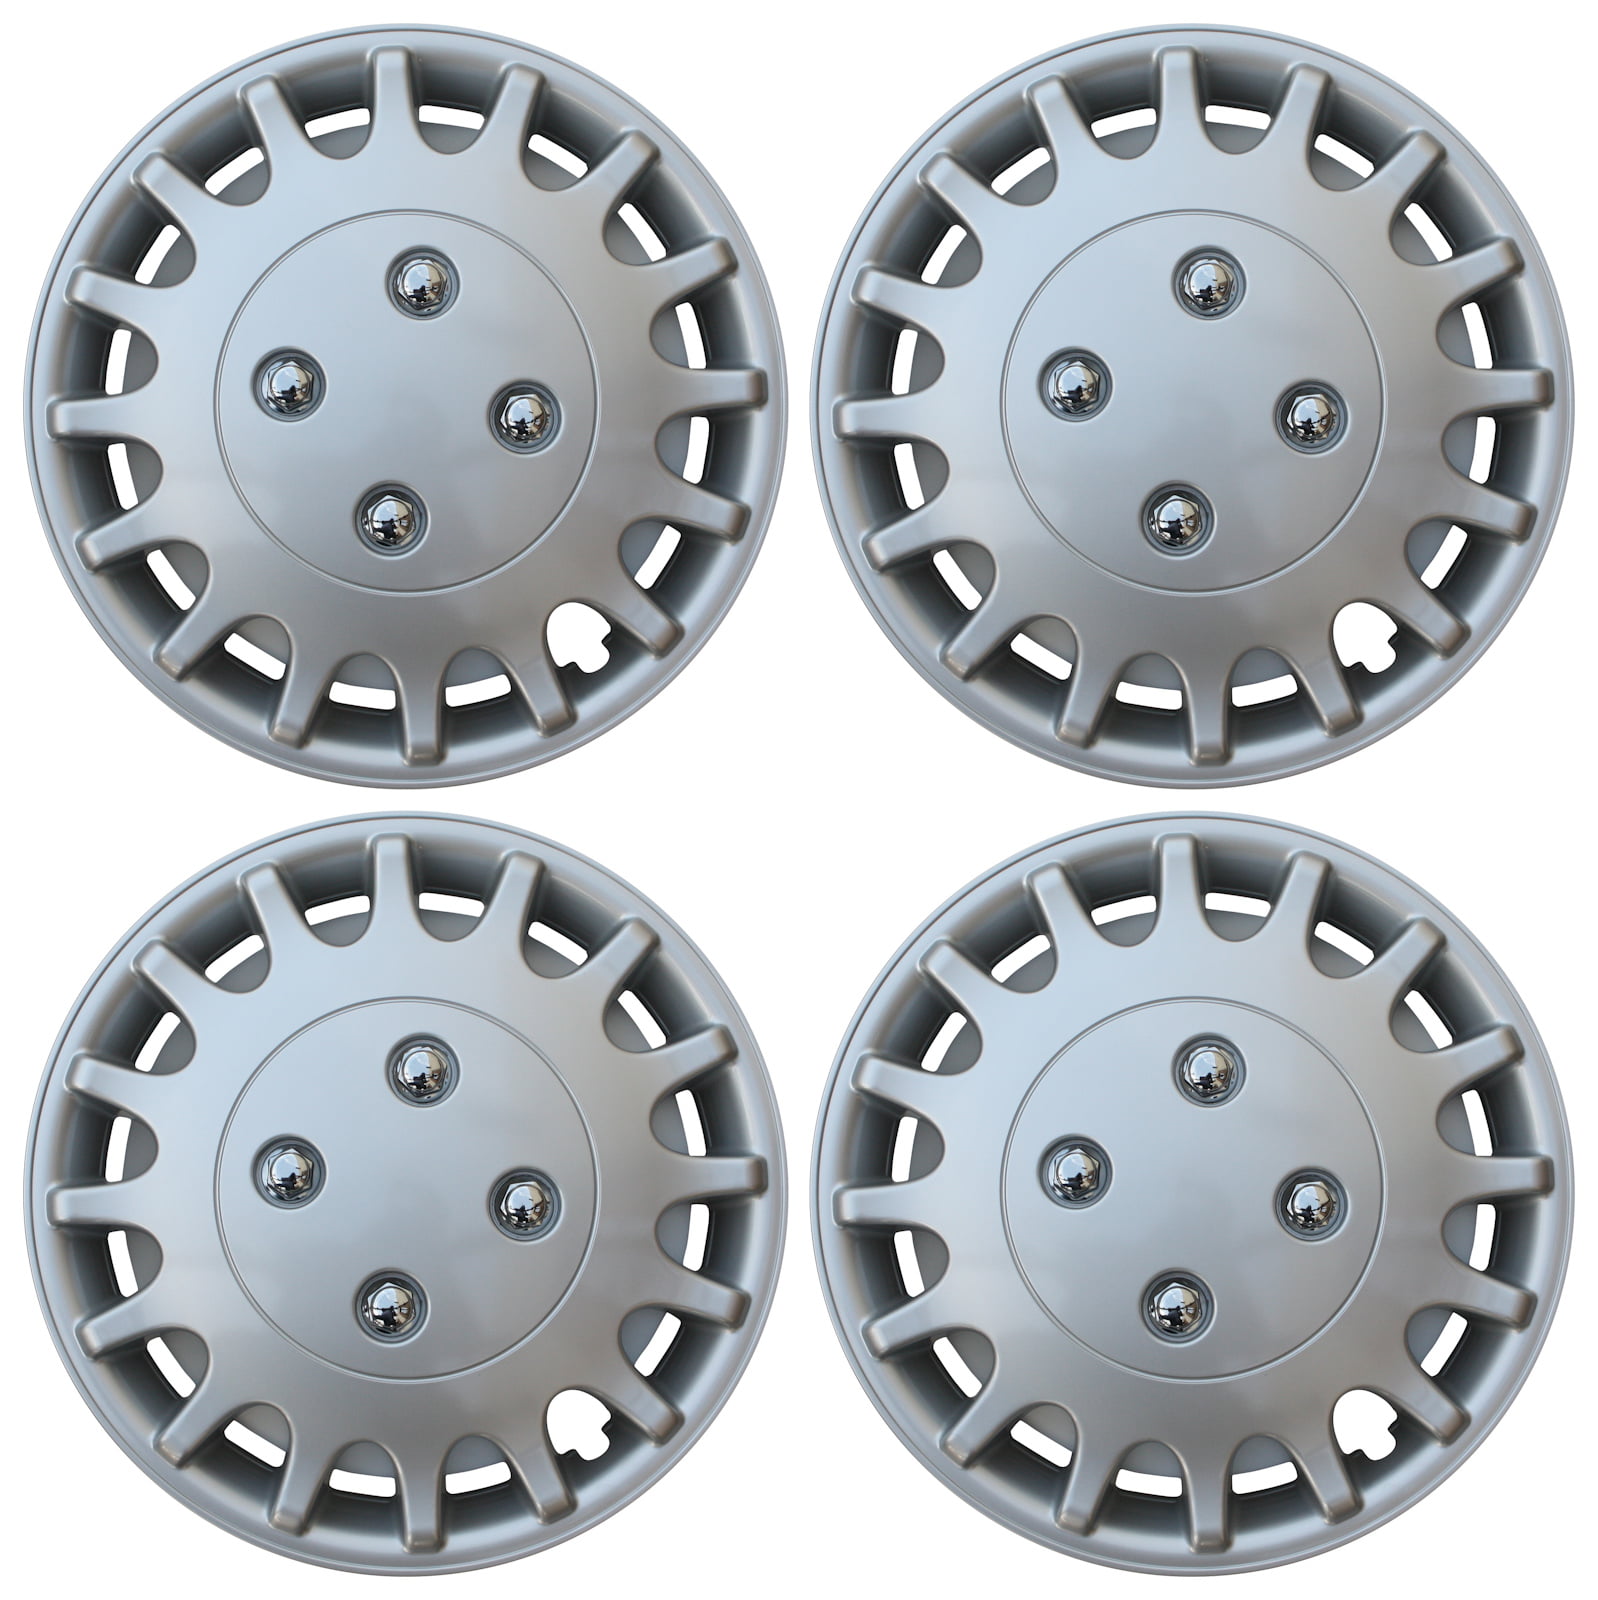 ONE single hubcap Heavy Duty Construction Hubcaps.com Premium Quality 16 Silver Hubcap/Wheel Cover fits Nissan Sentra 